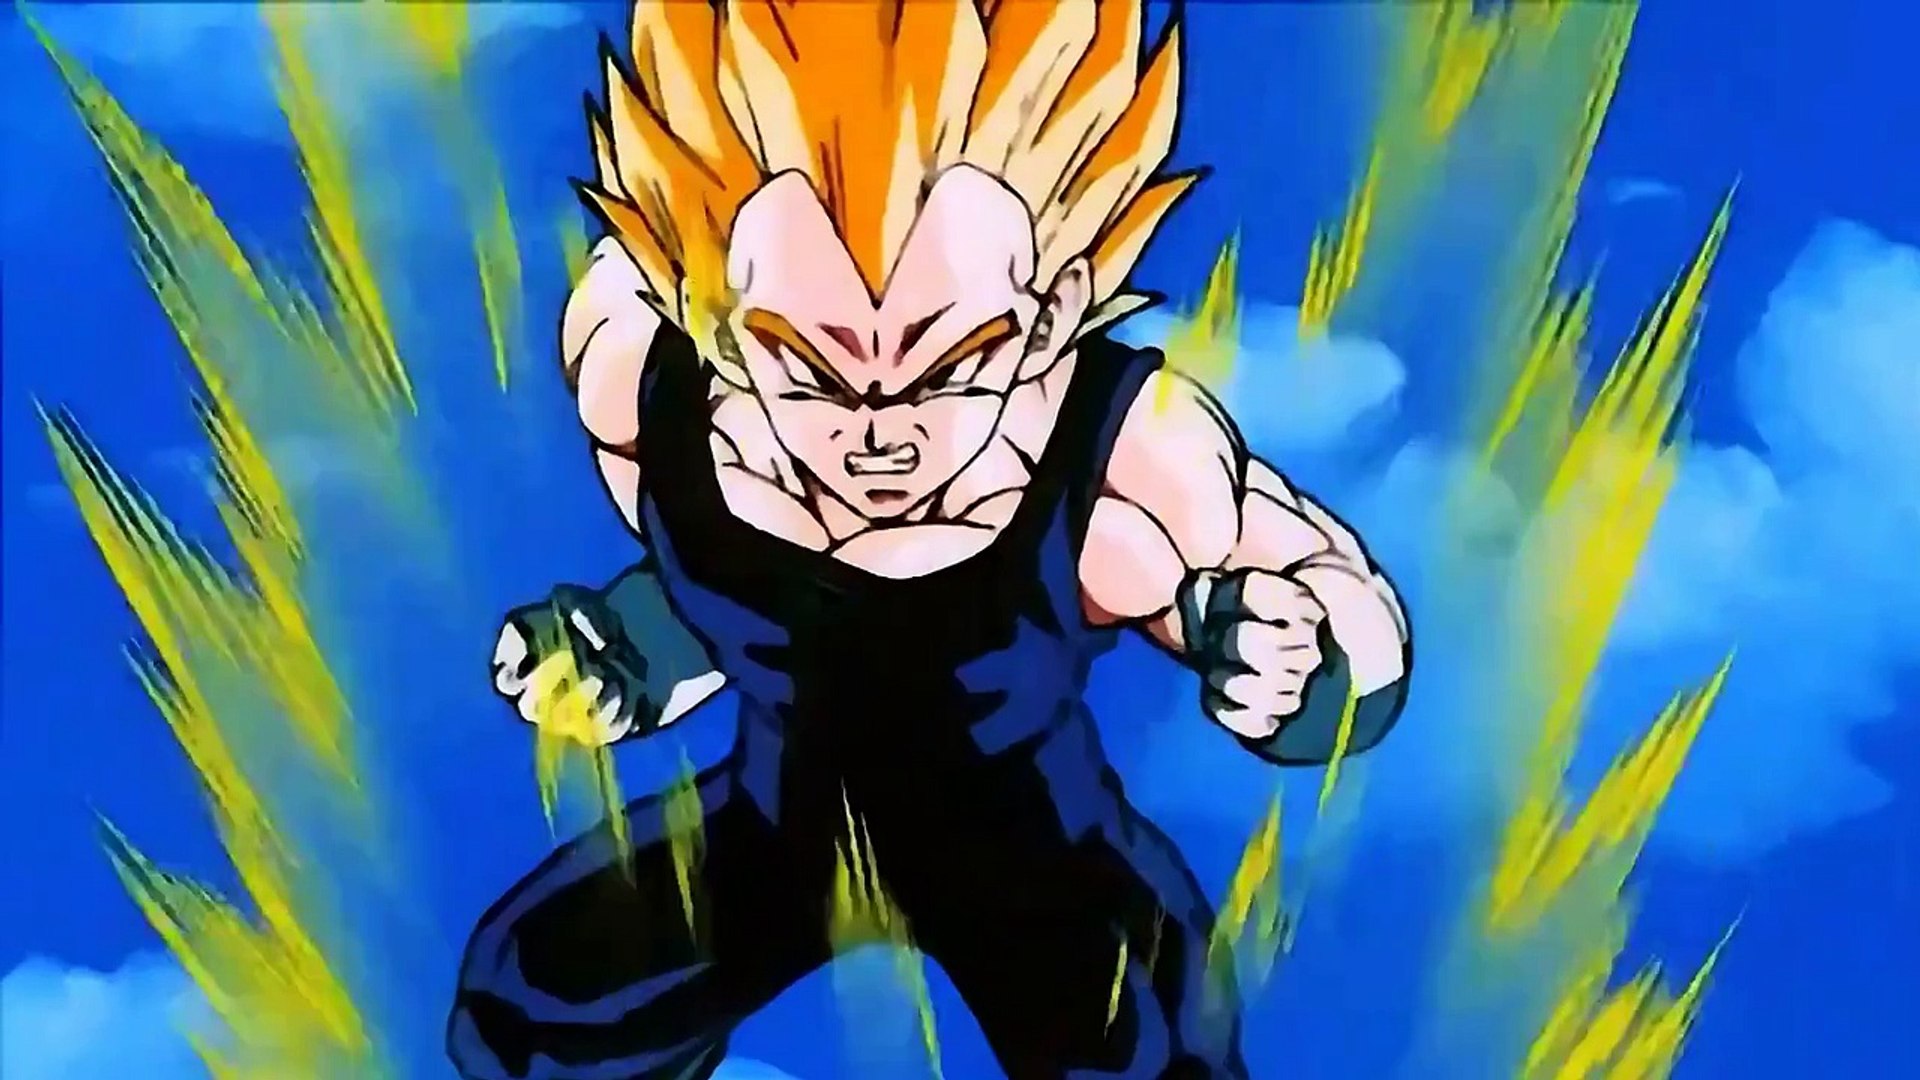 Ssj Goku And Ssj Vegeta Vs Super Buu Gohan Absorbed Uncut And Remastered 1080p Hd Video Dailymotion